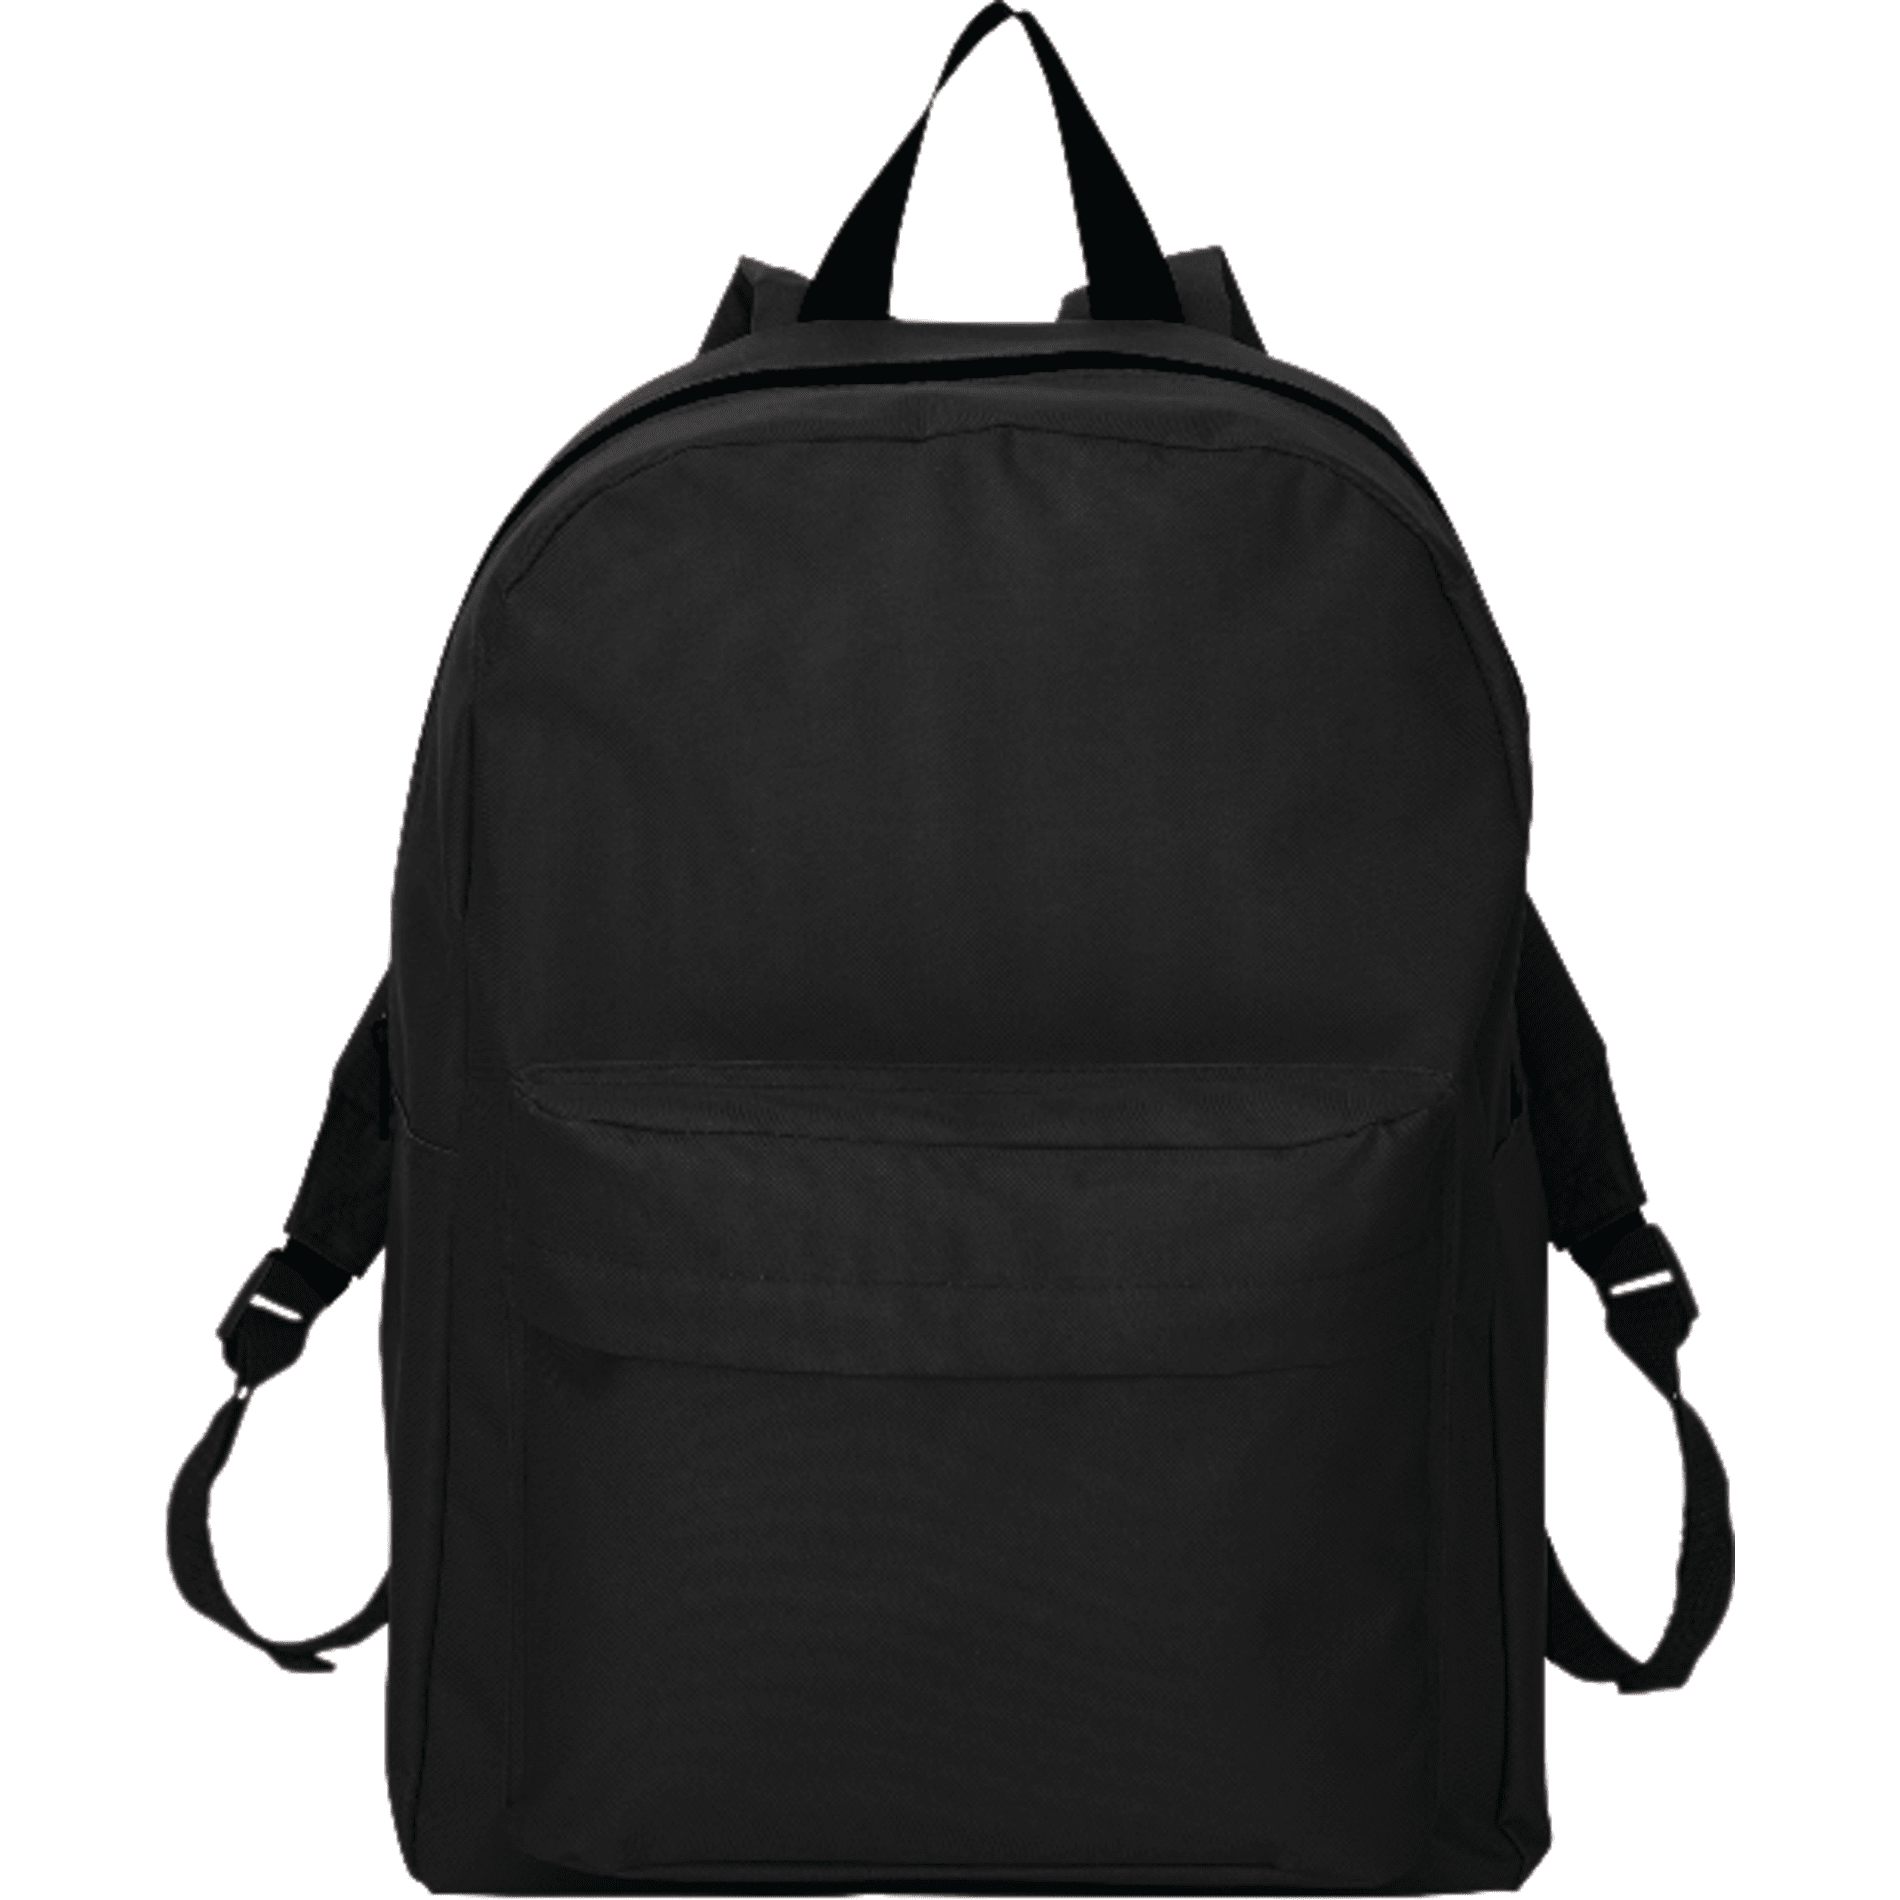 Bullet SM-7147 - Buddy Budget 15" Computer Backpack